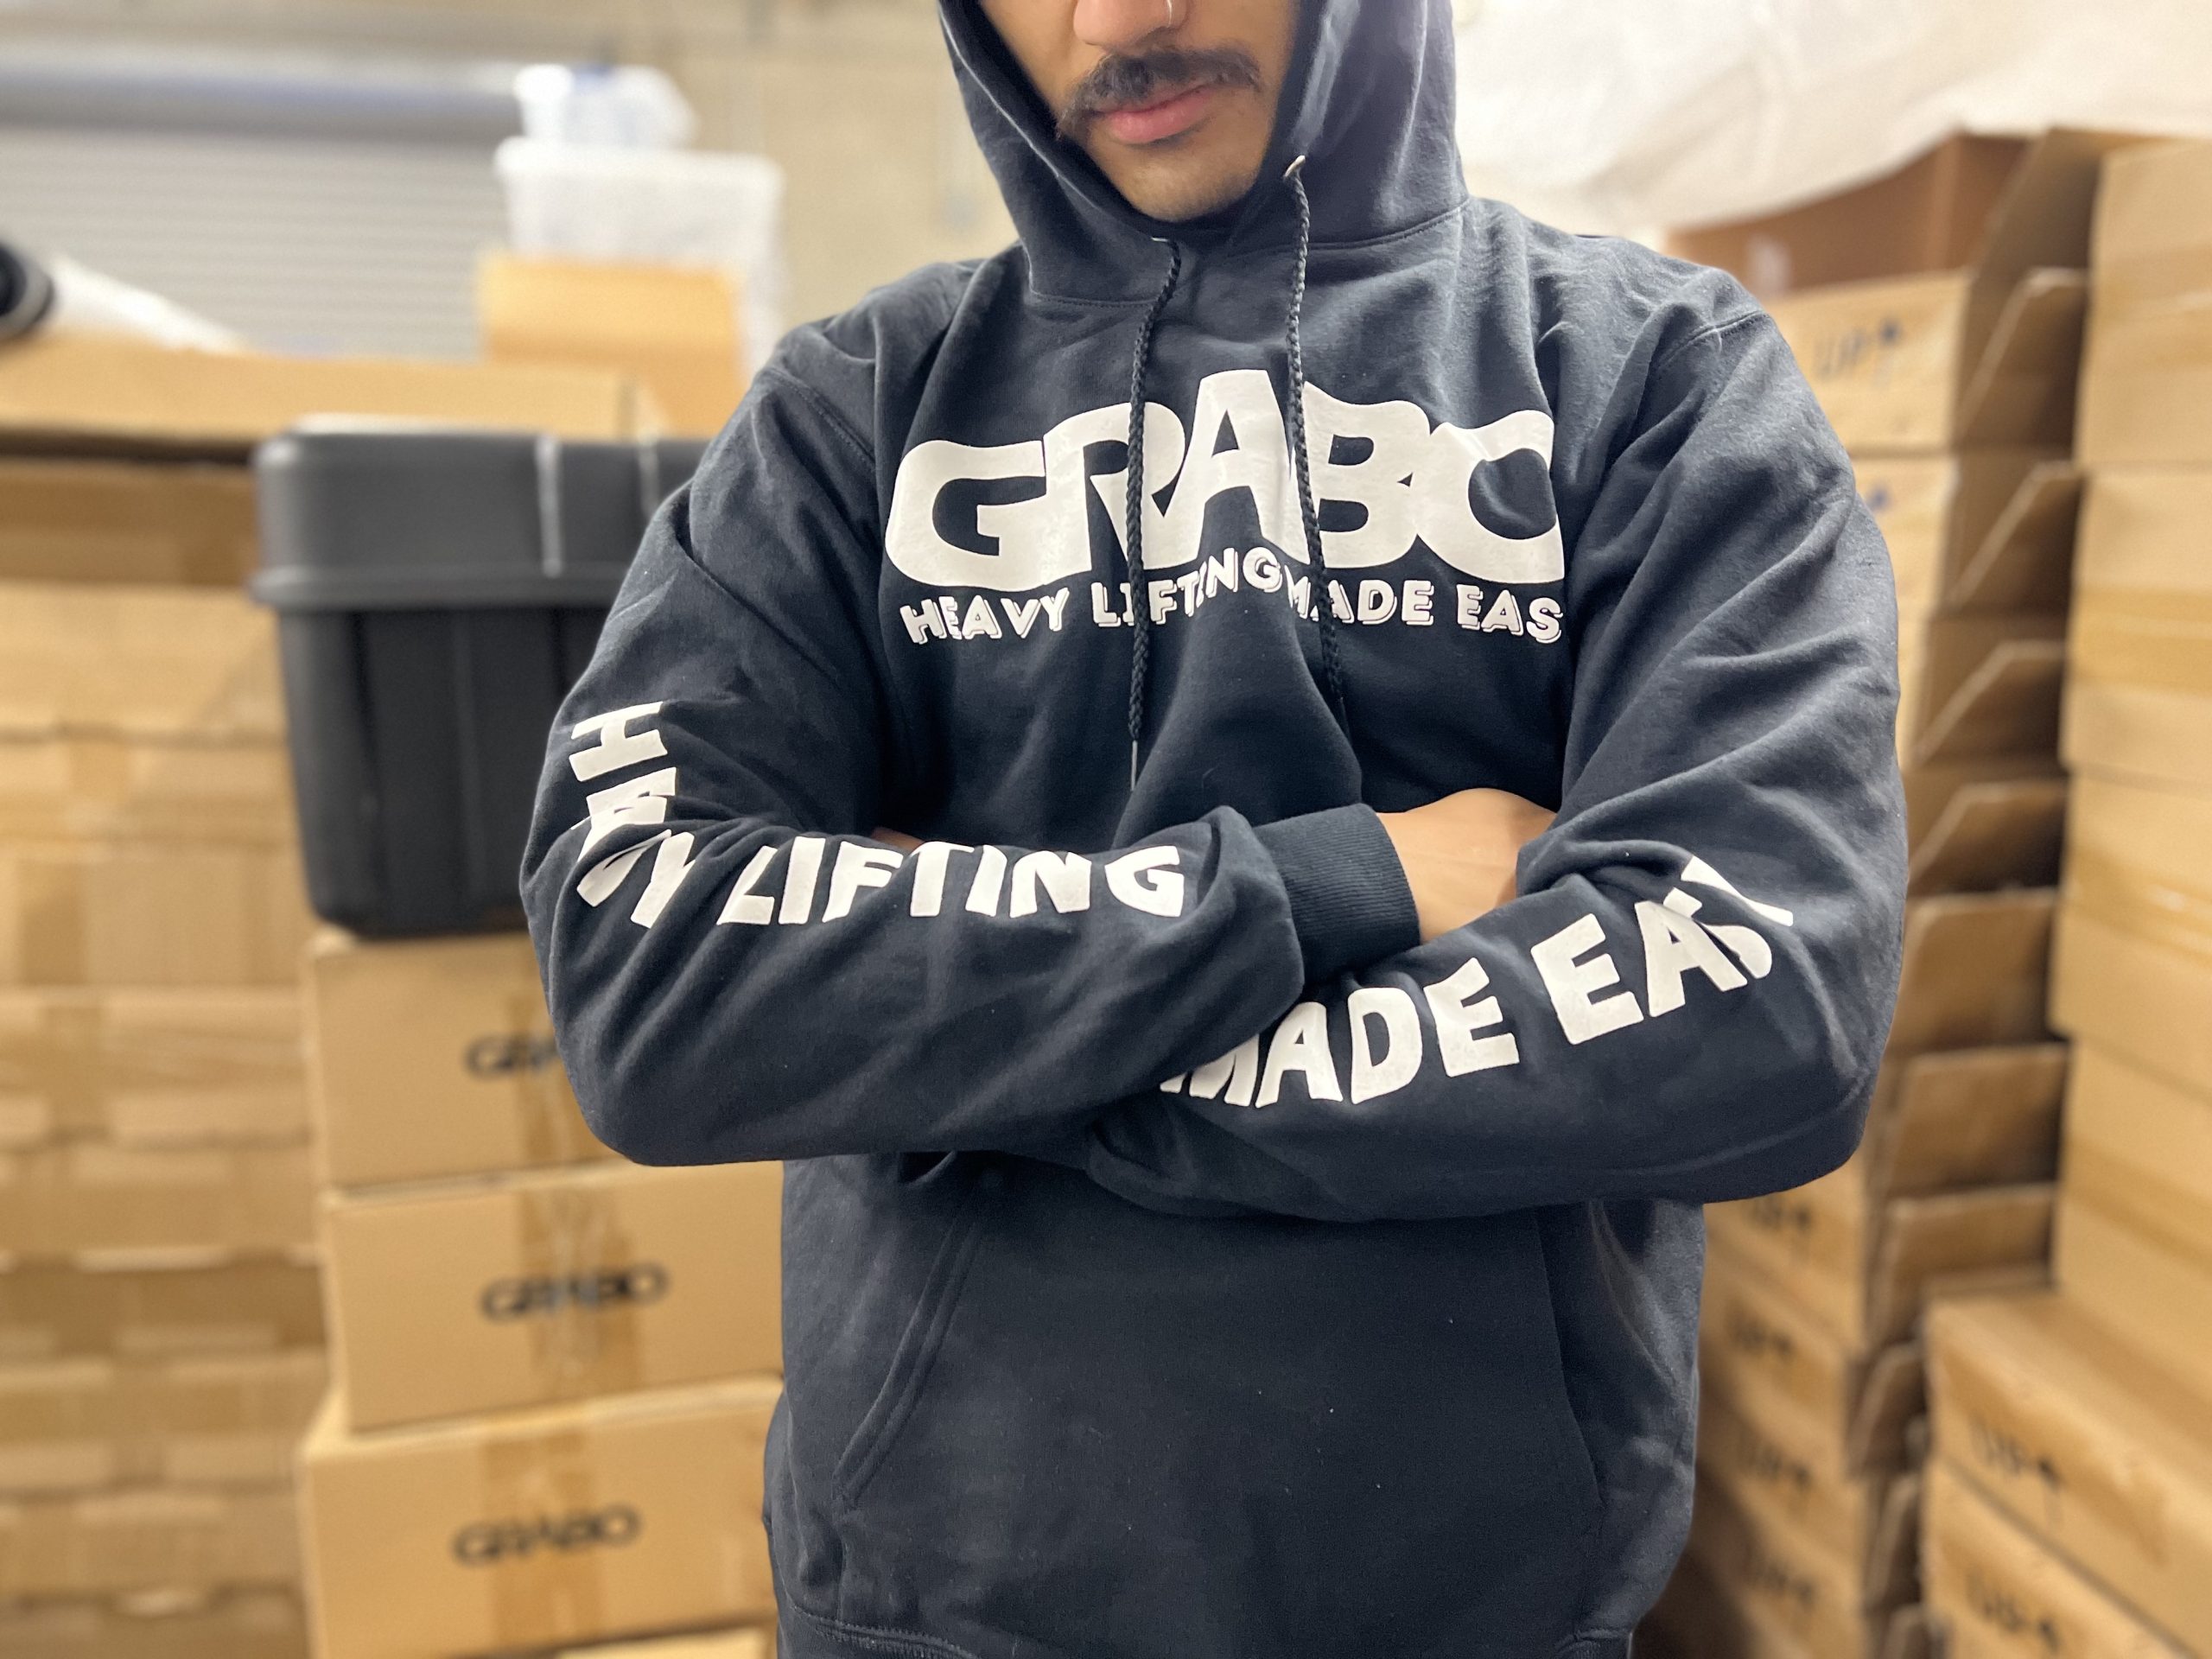 stad emotioneel Ontdooien, ontdooien, vorst ontdooien GRABO Heavy Lifting Made Easy Pullover Sweater - GRABO Factory Shop